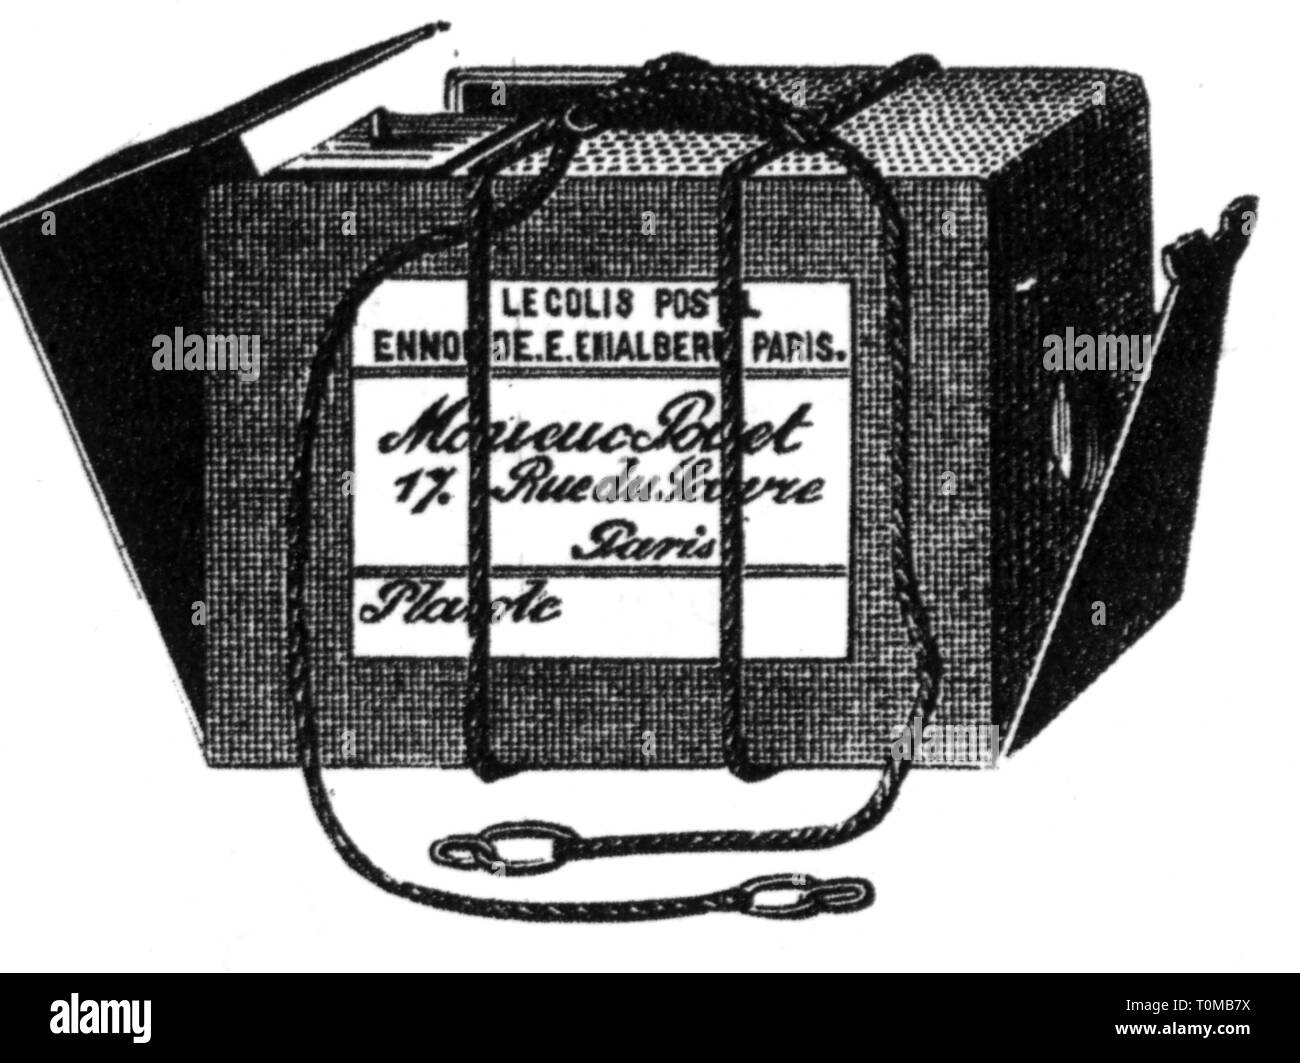 Fotografie, Kameras, maskiert als Paket von E.Enjalbert, Holzstich, 1887, Additional-Rights - Clearance-Info - Not-Available Stockfoto